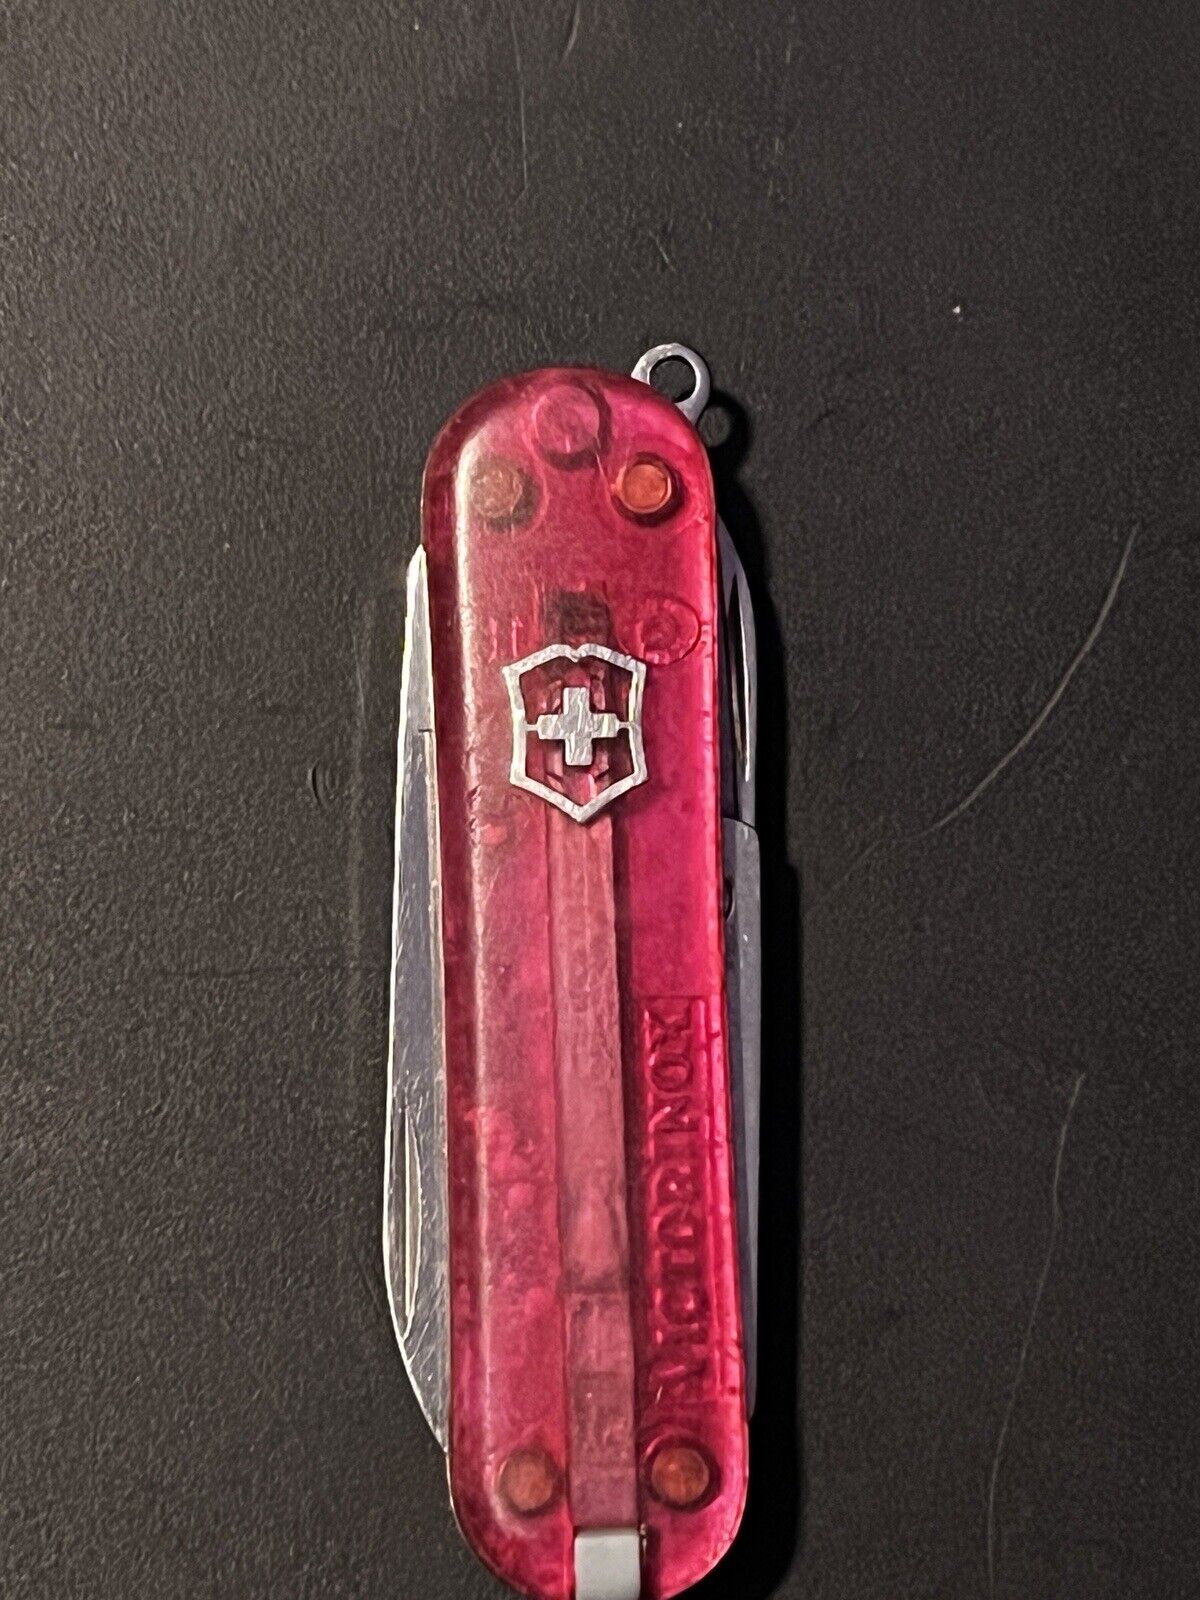 Victorinox Swiss Army Knife Mini Pink Edition